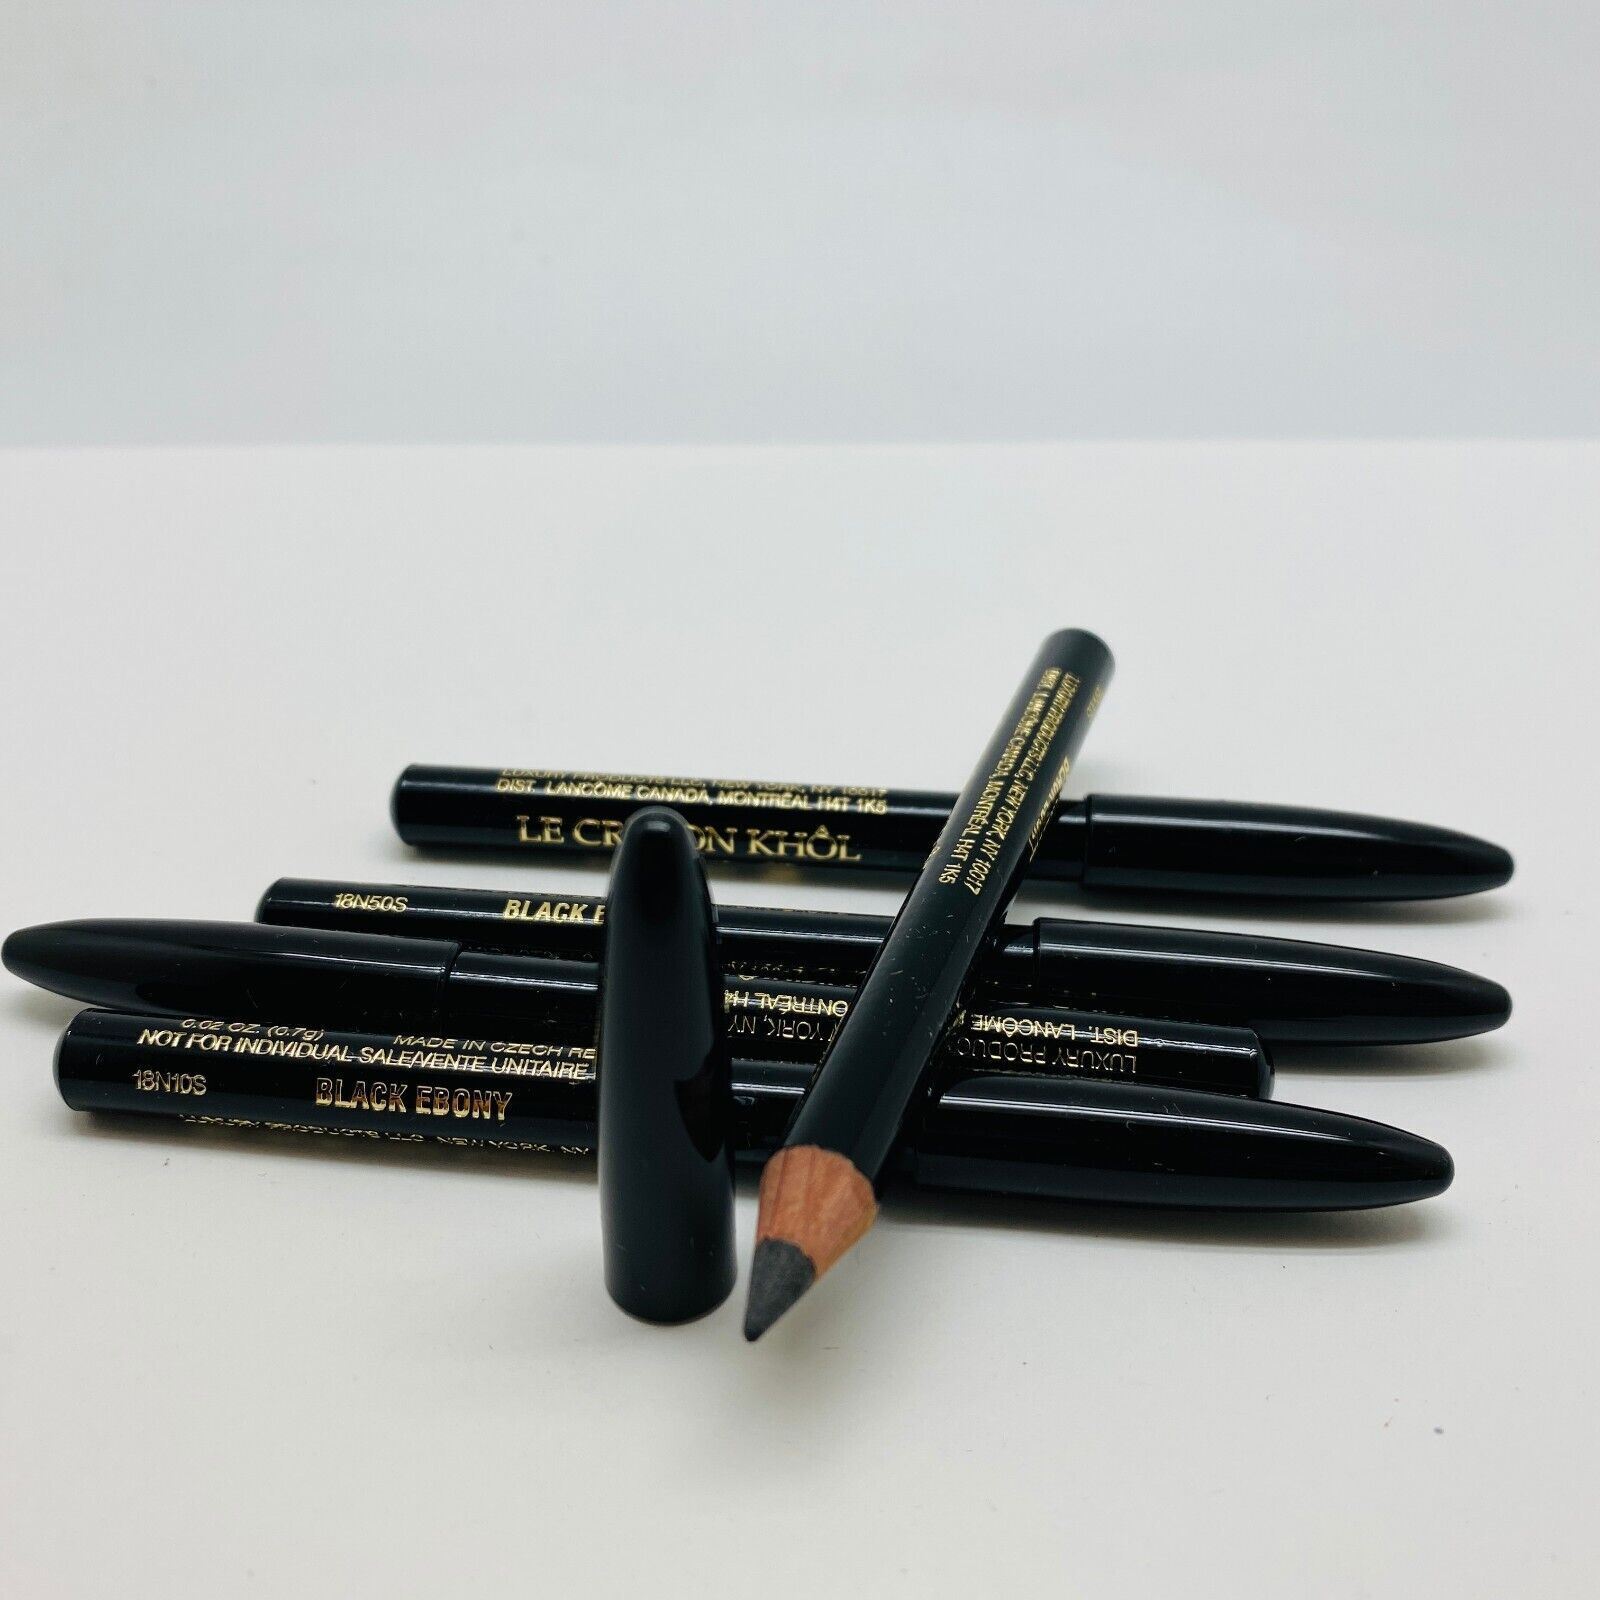 NEW Lancome Le Crayon Khol Eyeliner Pencil #Black Ebony -0.02oz (lot of 5) - NEW Lancôme Lancome Le Crayon Khol - фотография #4